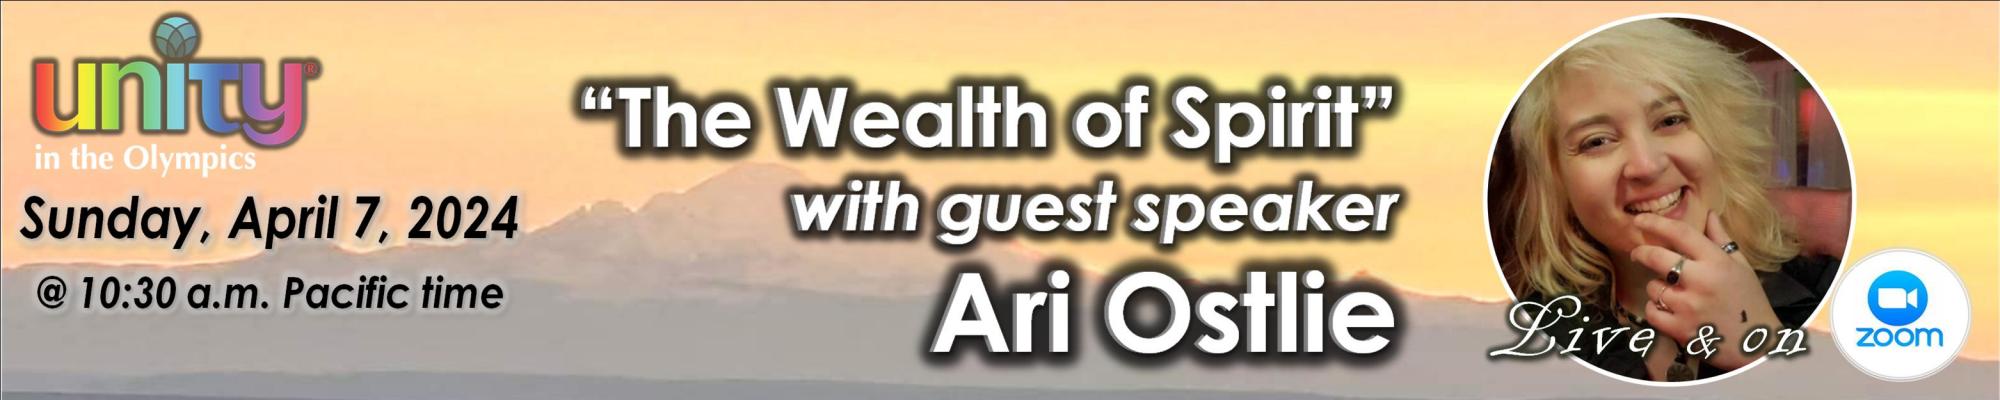 April 7, 2024, Sunday Celebration Service "The Wealth of Spirit" with Ari Ostlie